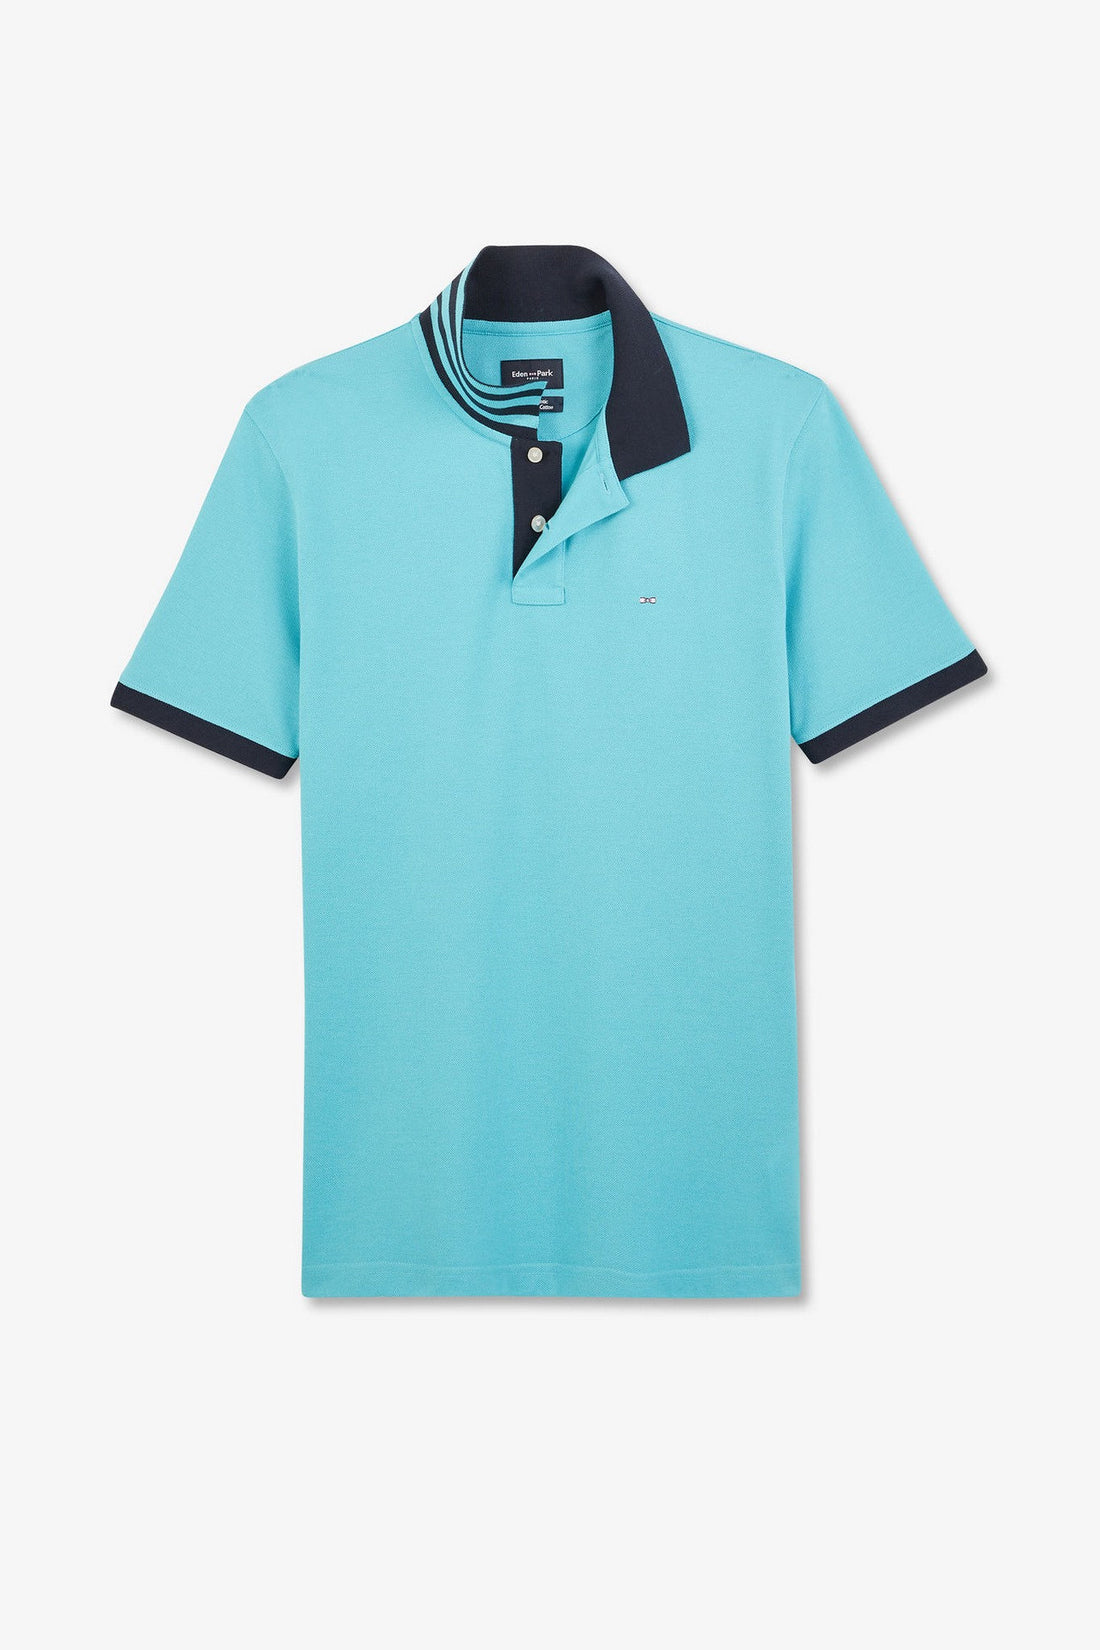 Turquoise Blue Short-Sleeved Polo Shirt_E24MAIPC0014_VEM31_02